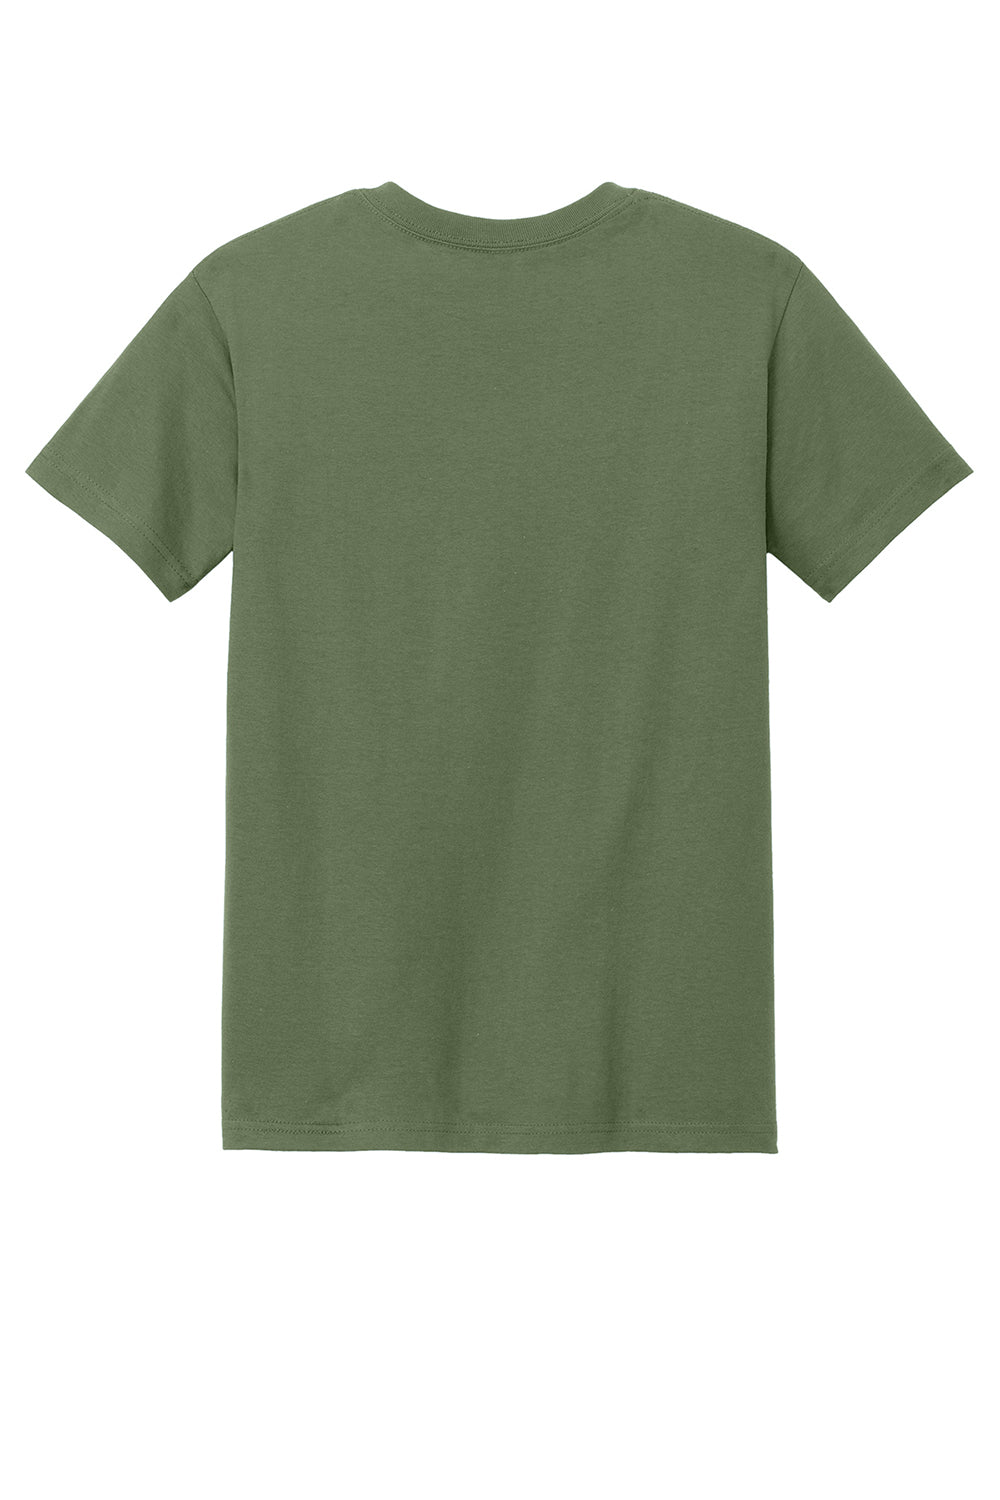 American Apparel 1301/AL1301 Mens Short Sleeve Crewneck T-Shirt Military Green Flat Back